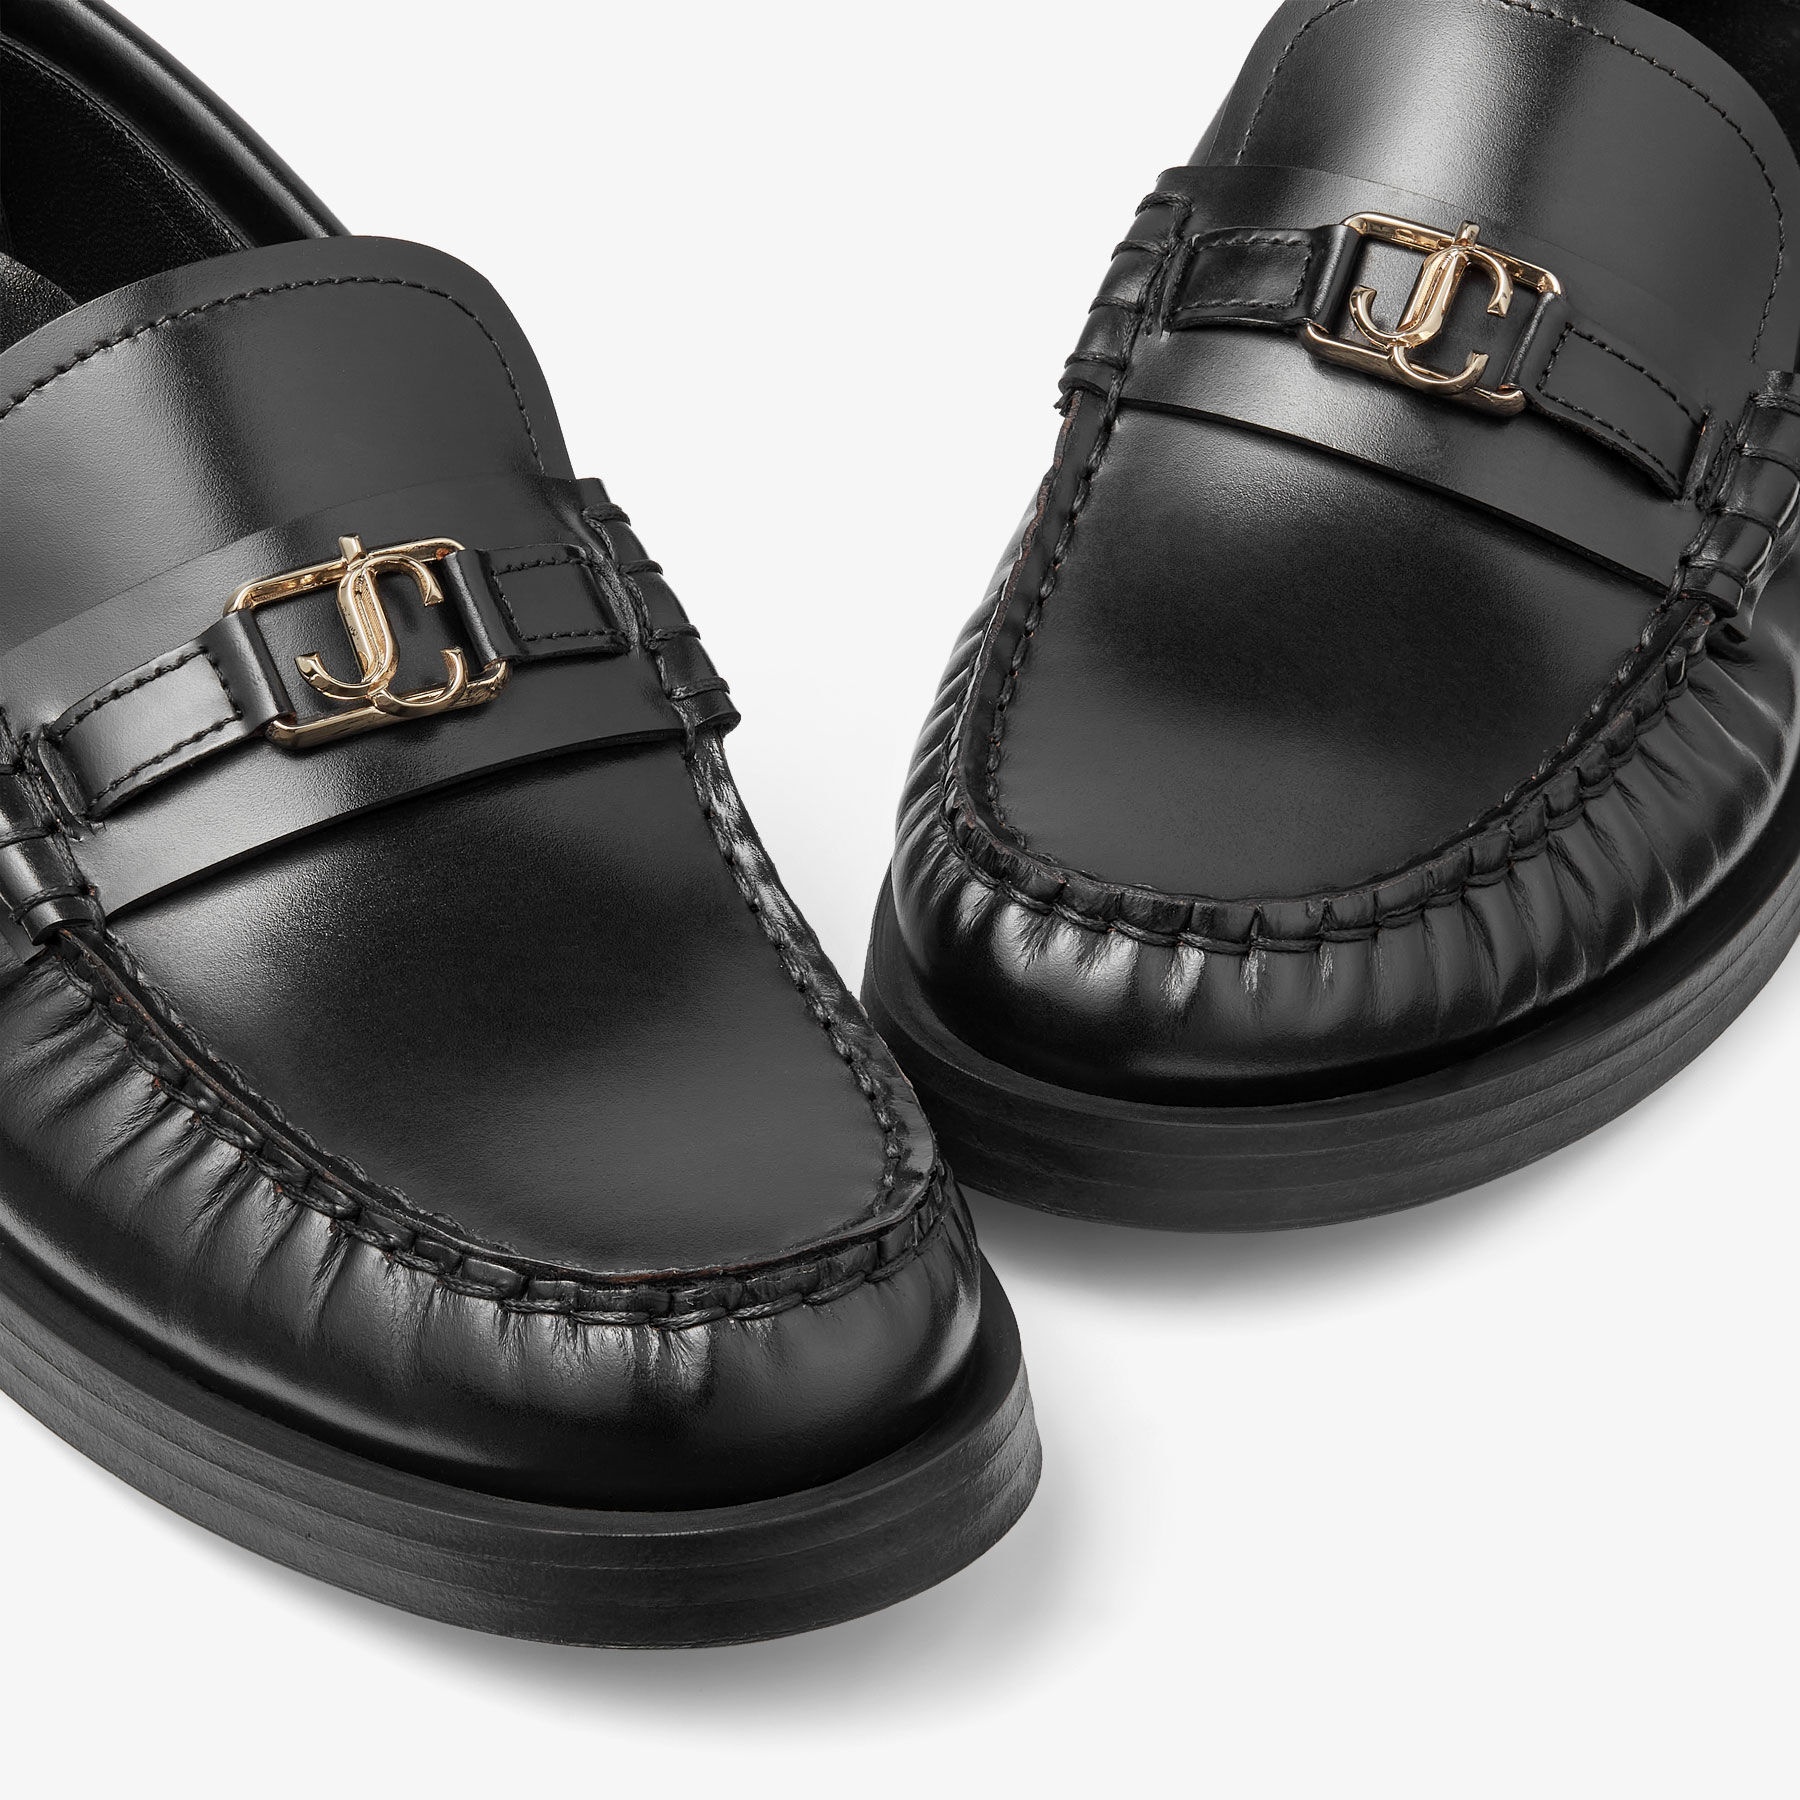 Addie/JC
Black Box Calf Leather Flat Loafers with JC Emblem - 3